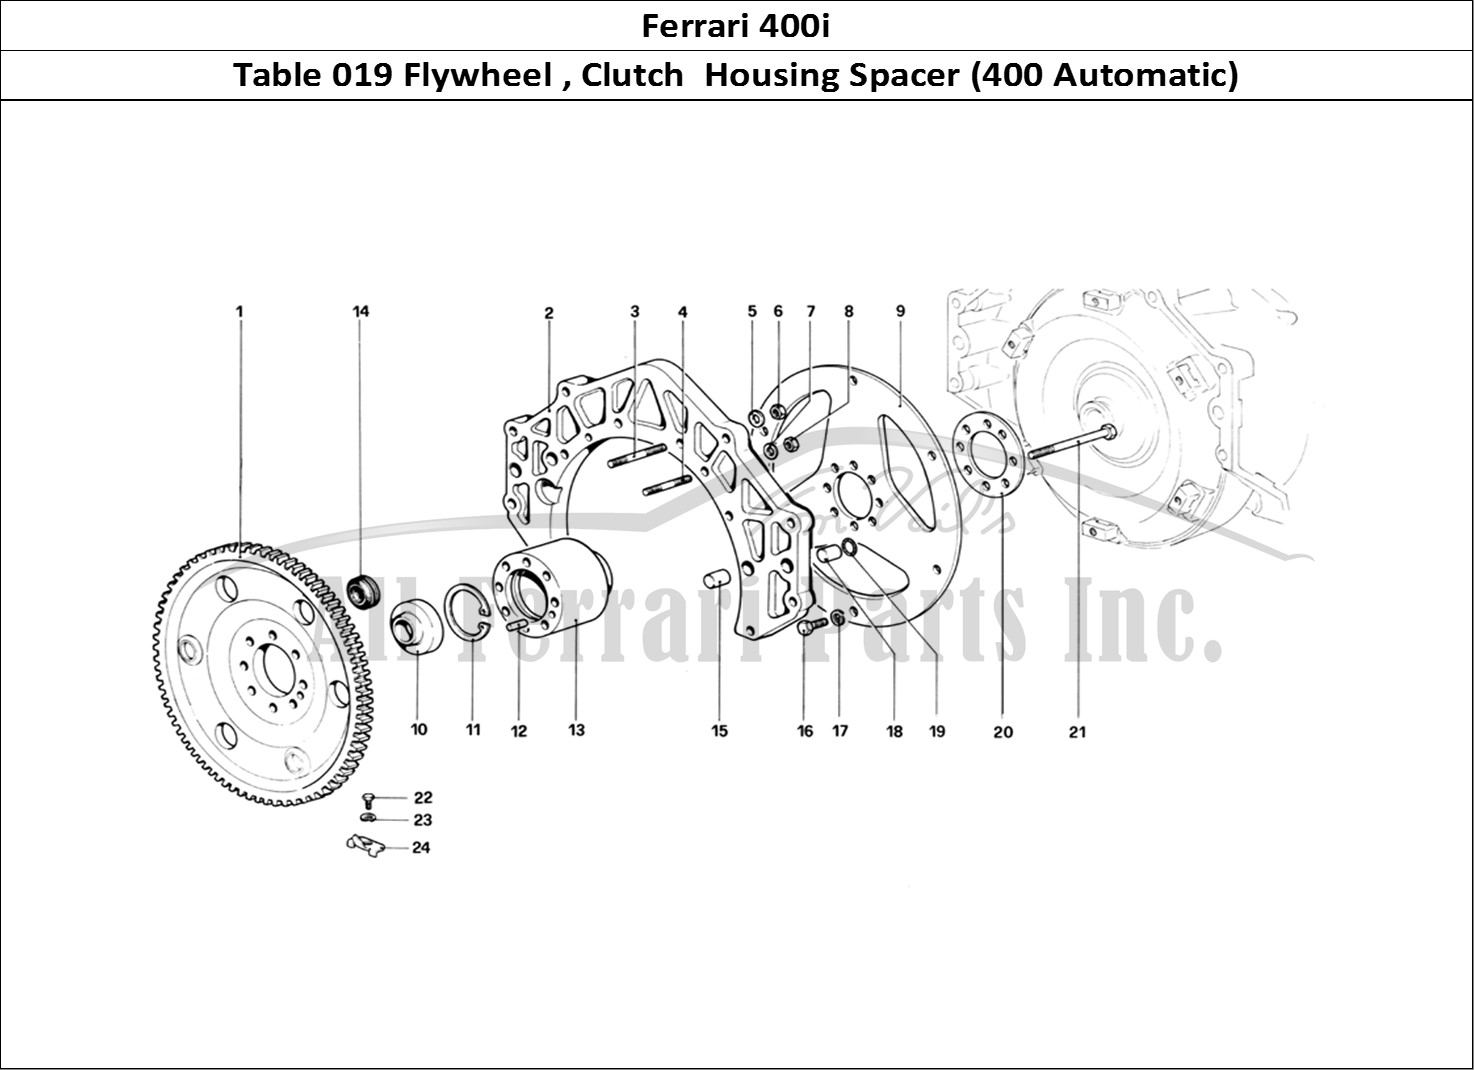 Ferrari Parts Ferrari 400i (1983 Mechanical) Page 019 Engine Flywheel and Clutc